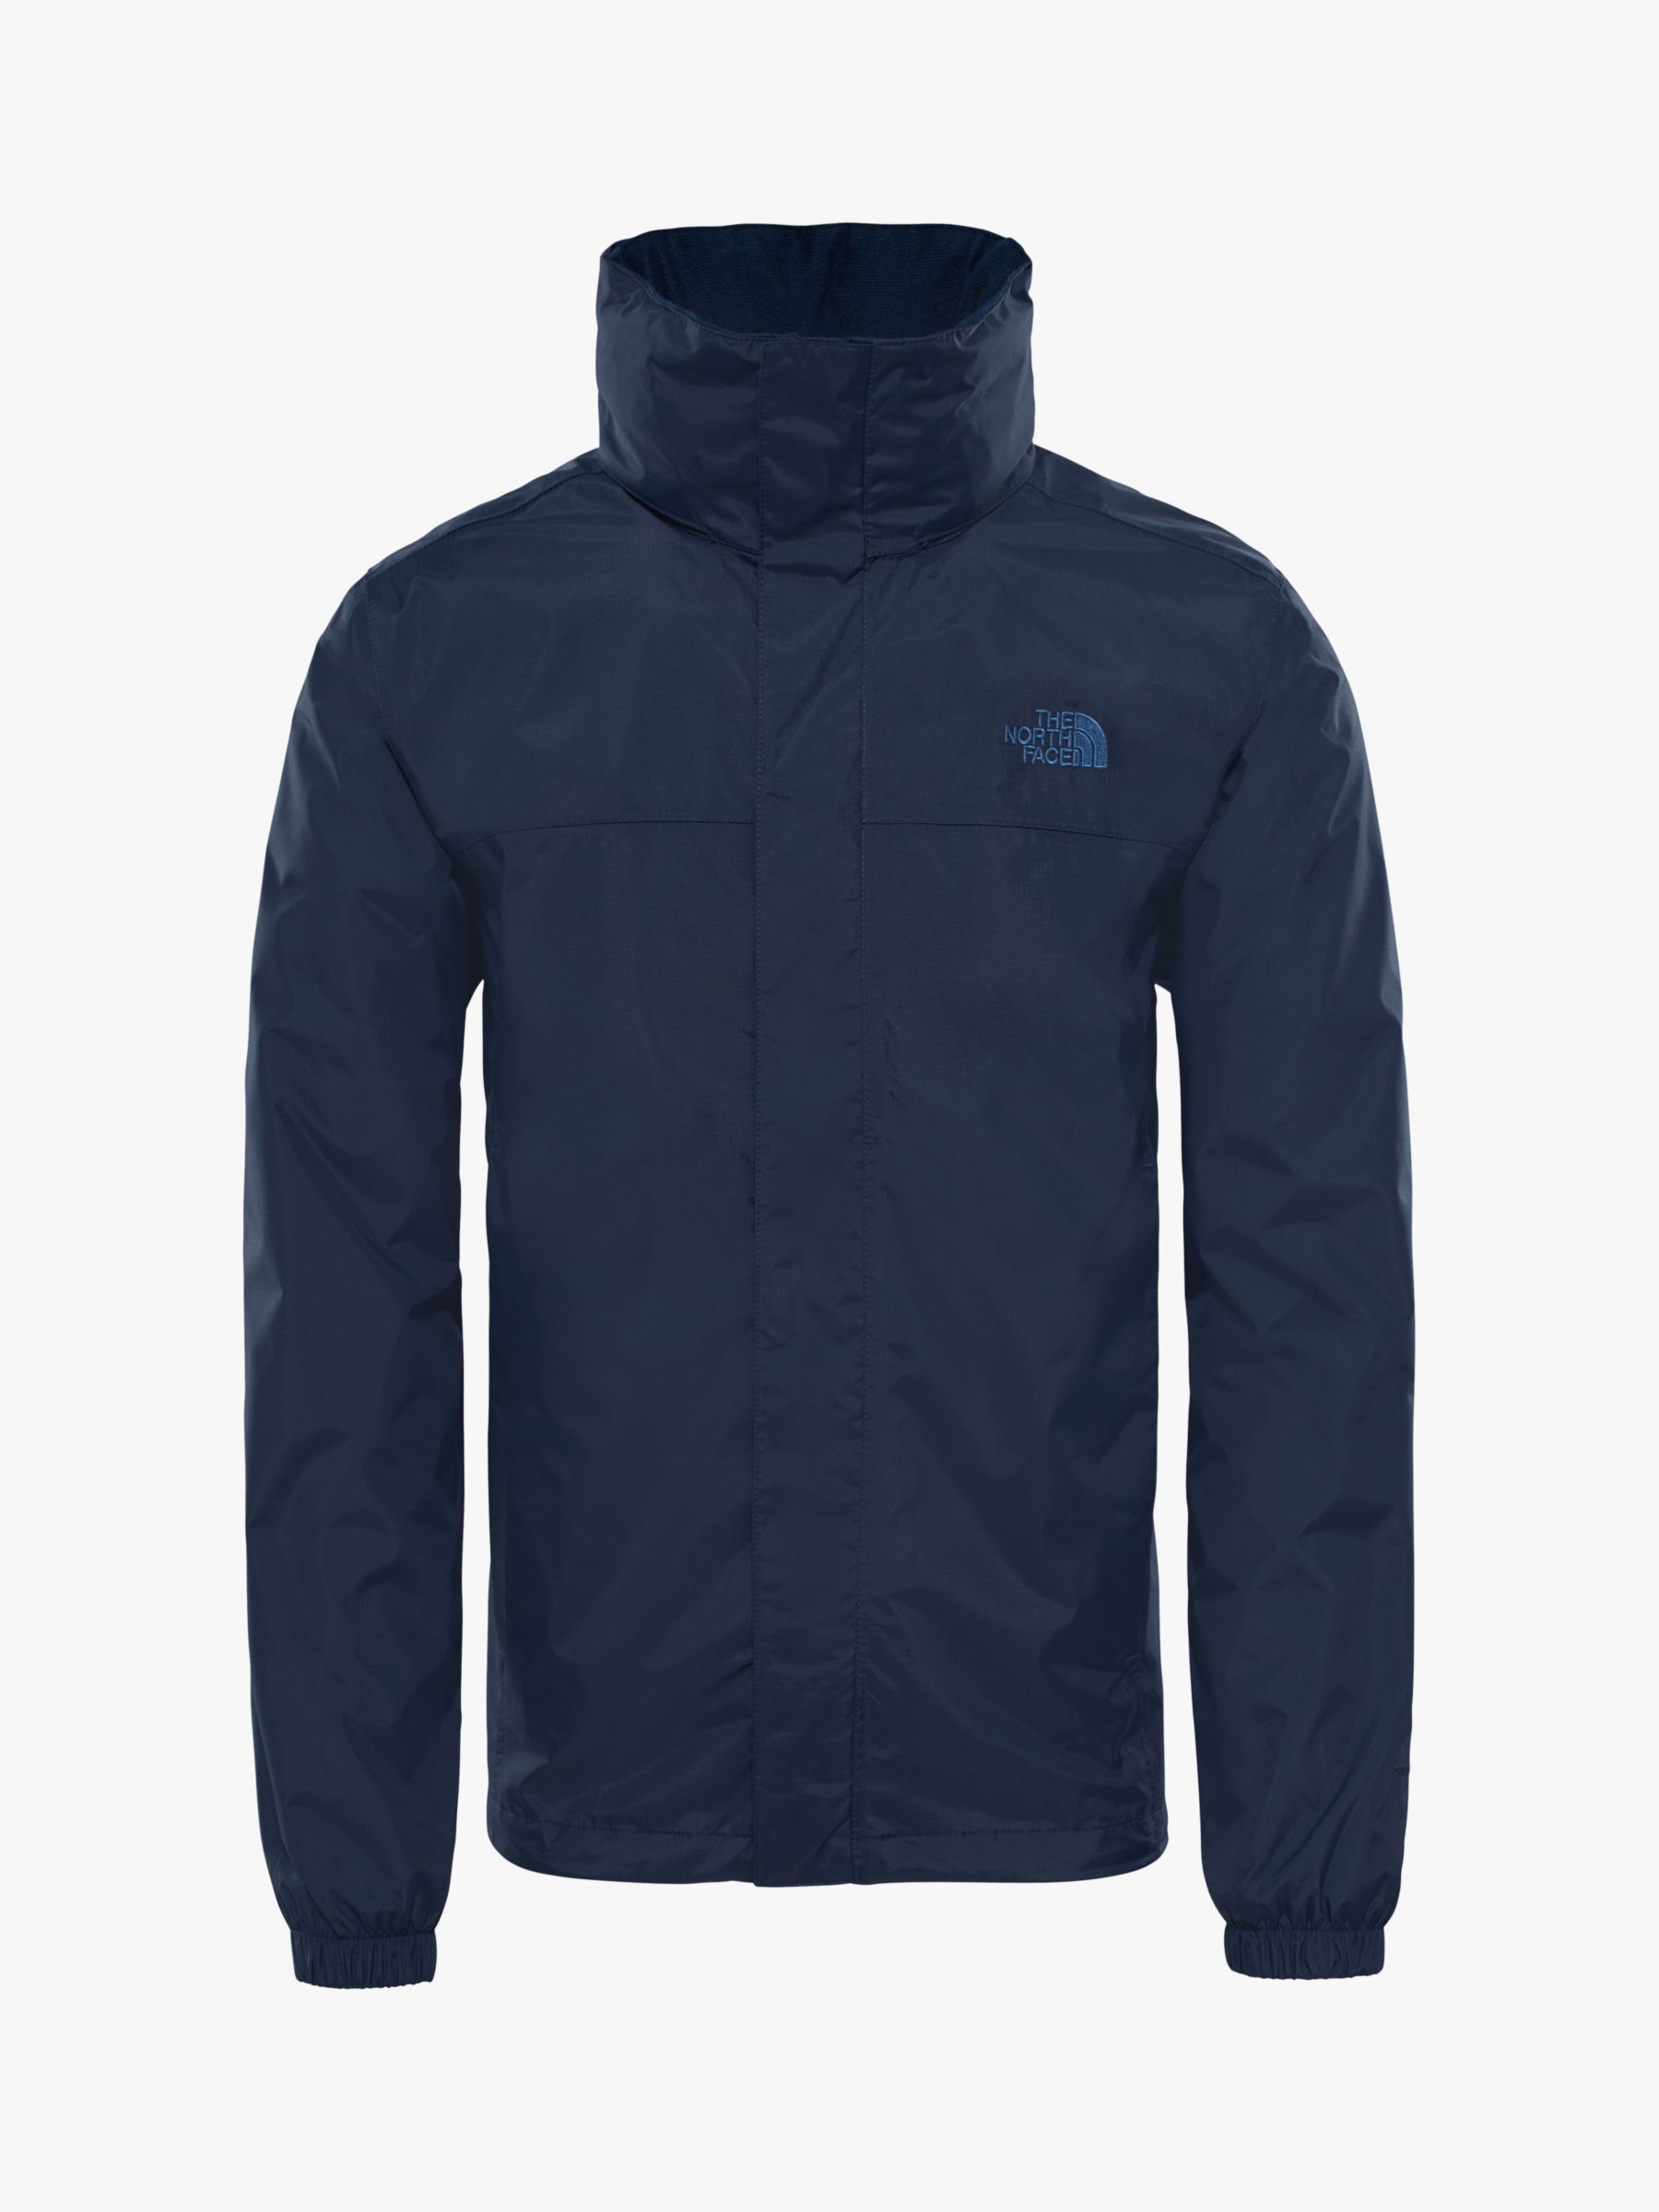 navy blue north face rain jacket